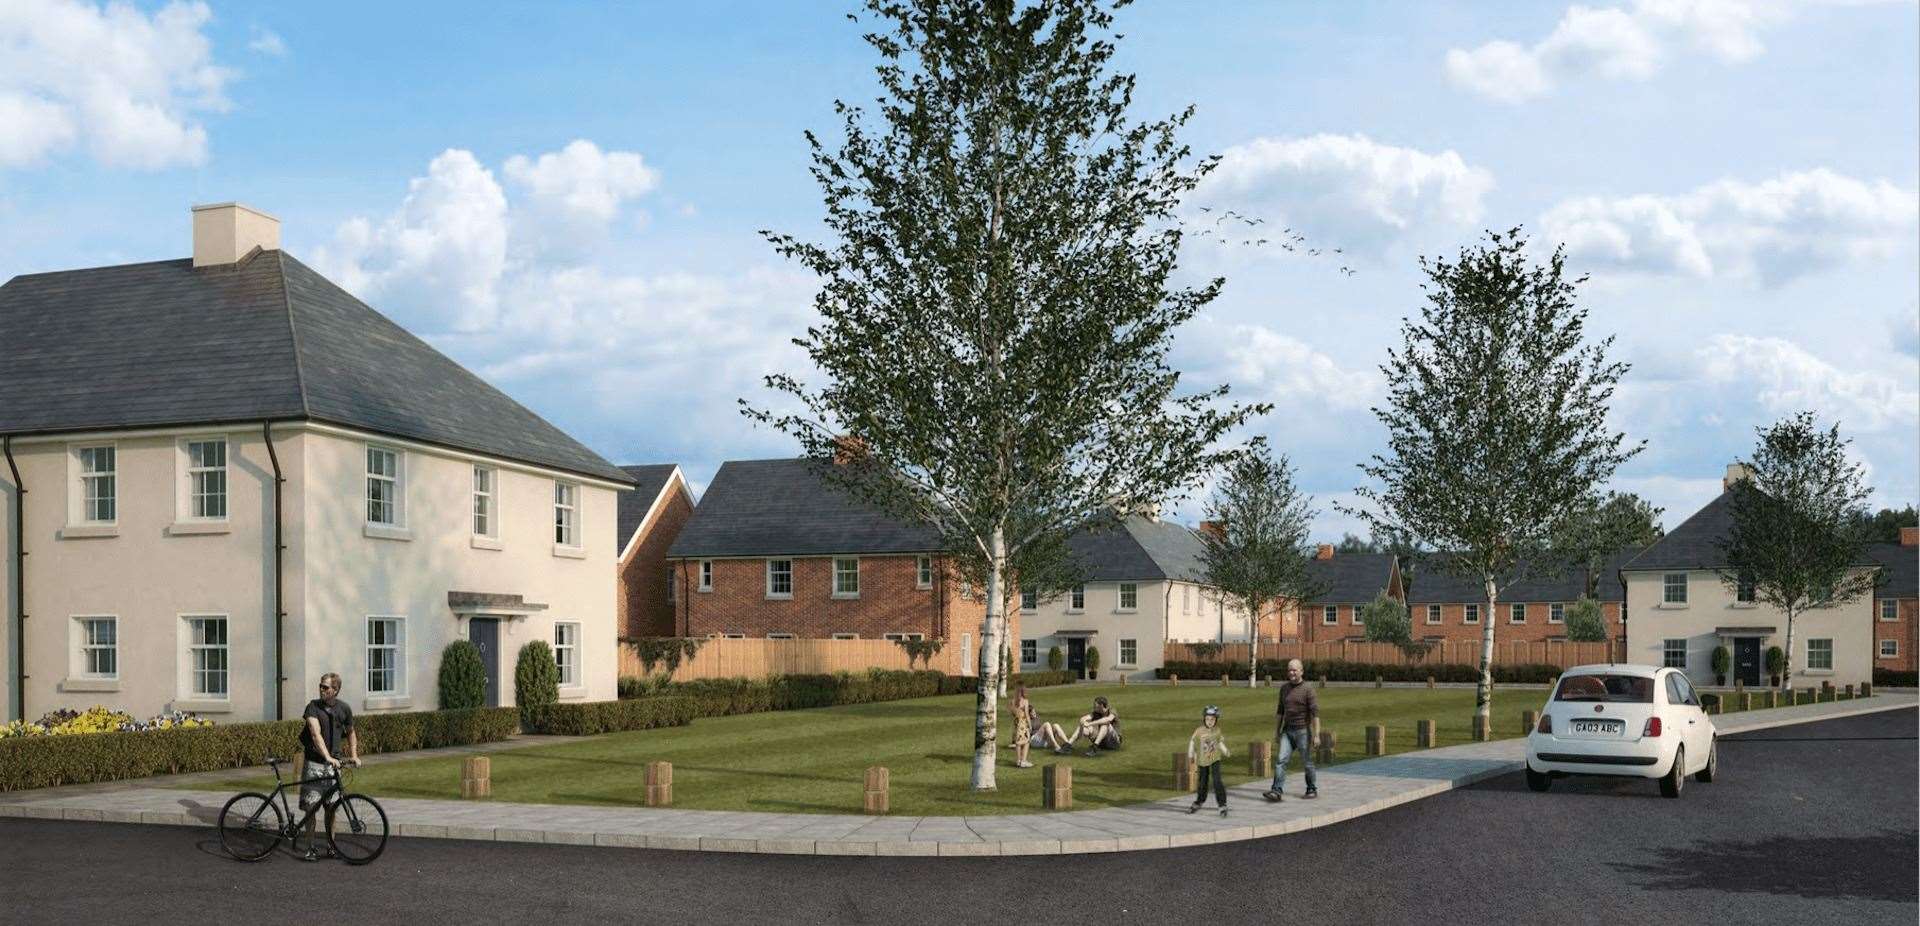 Quinn Estates’ plans for new homes at Cottington Park